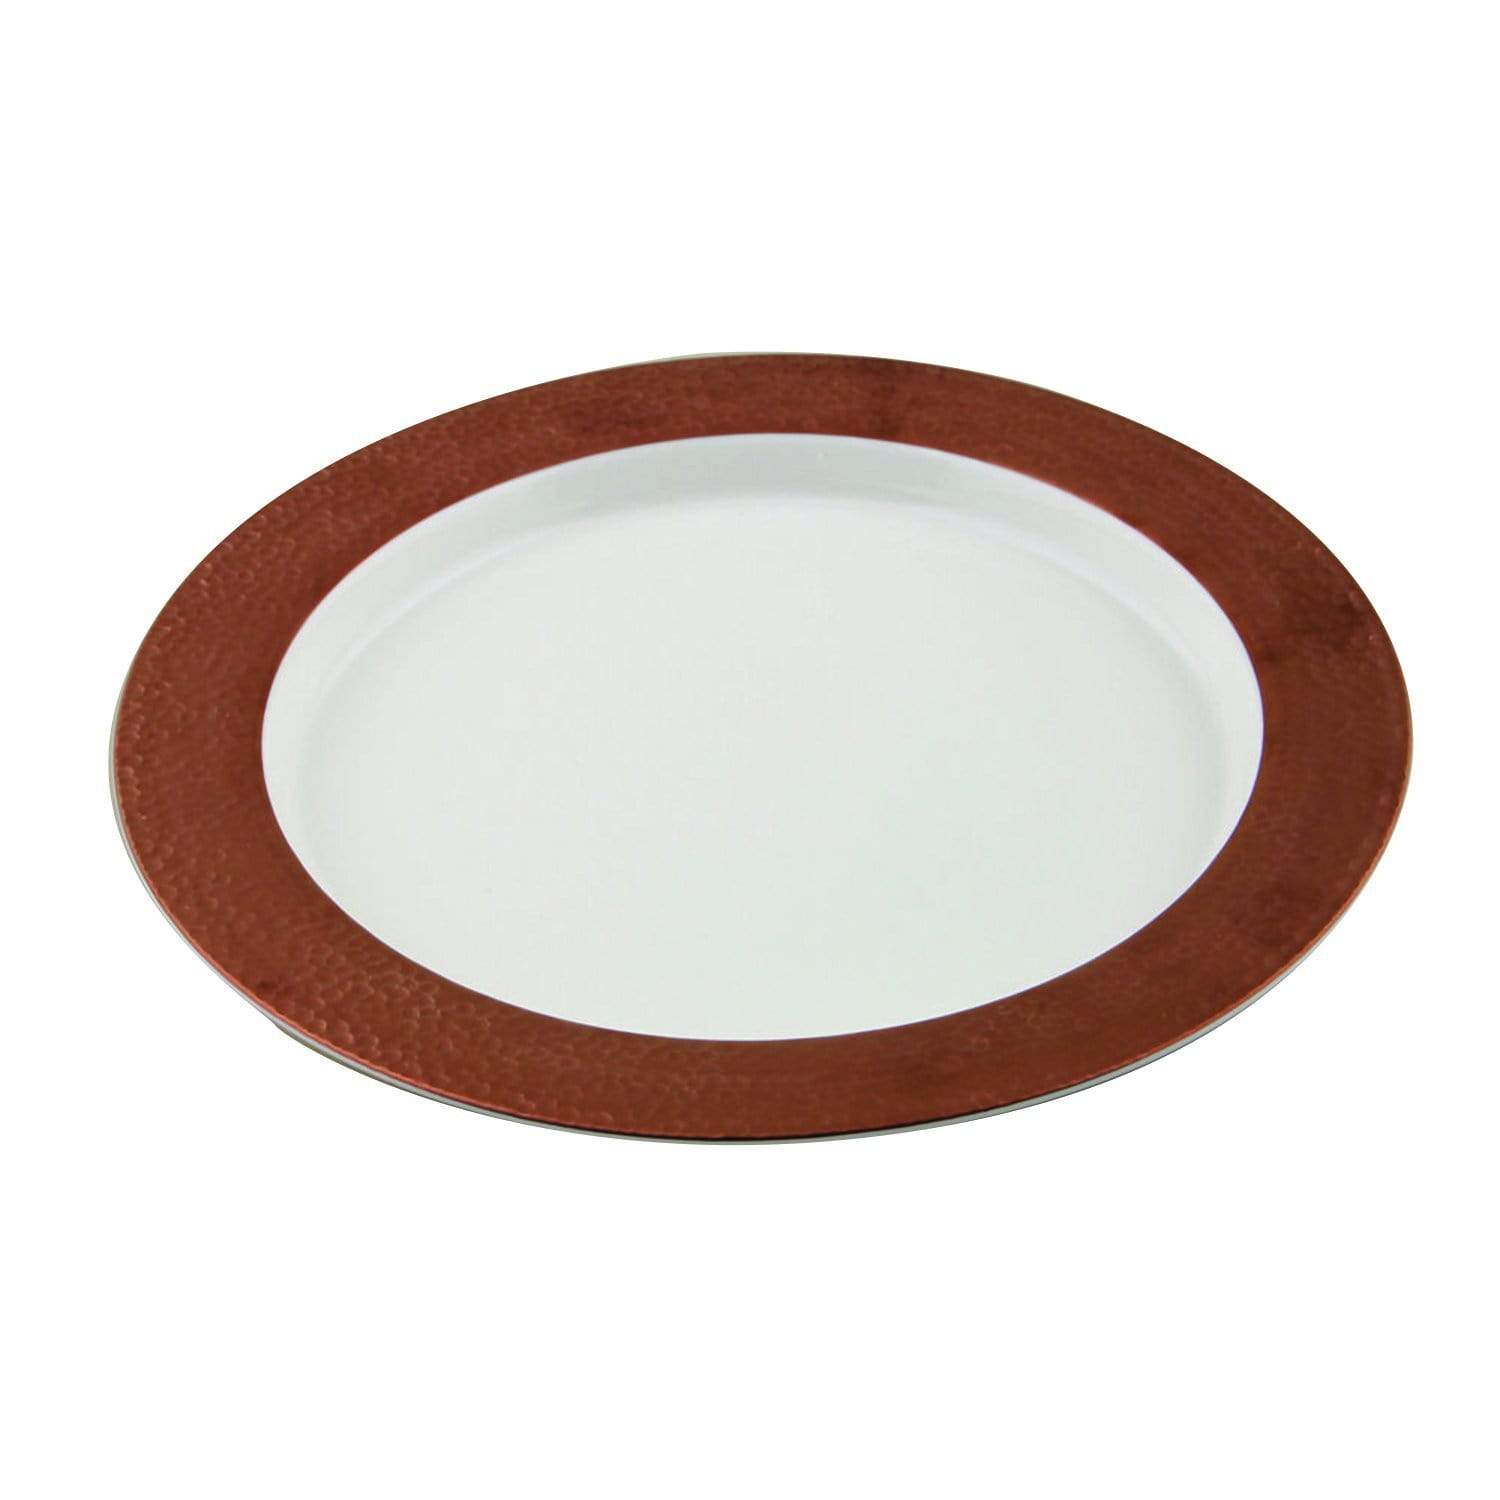 Porland Porselen Legacy Copper Flat Dinner Plate - 27 cm - 04ALM004377 - Jashanmal Home